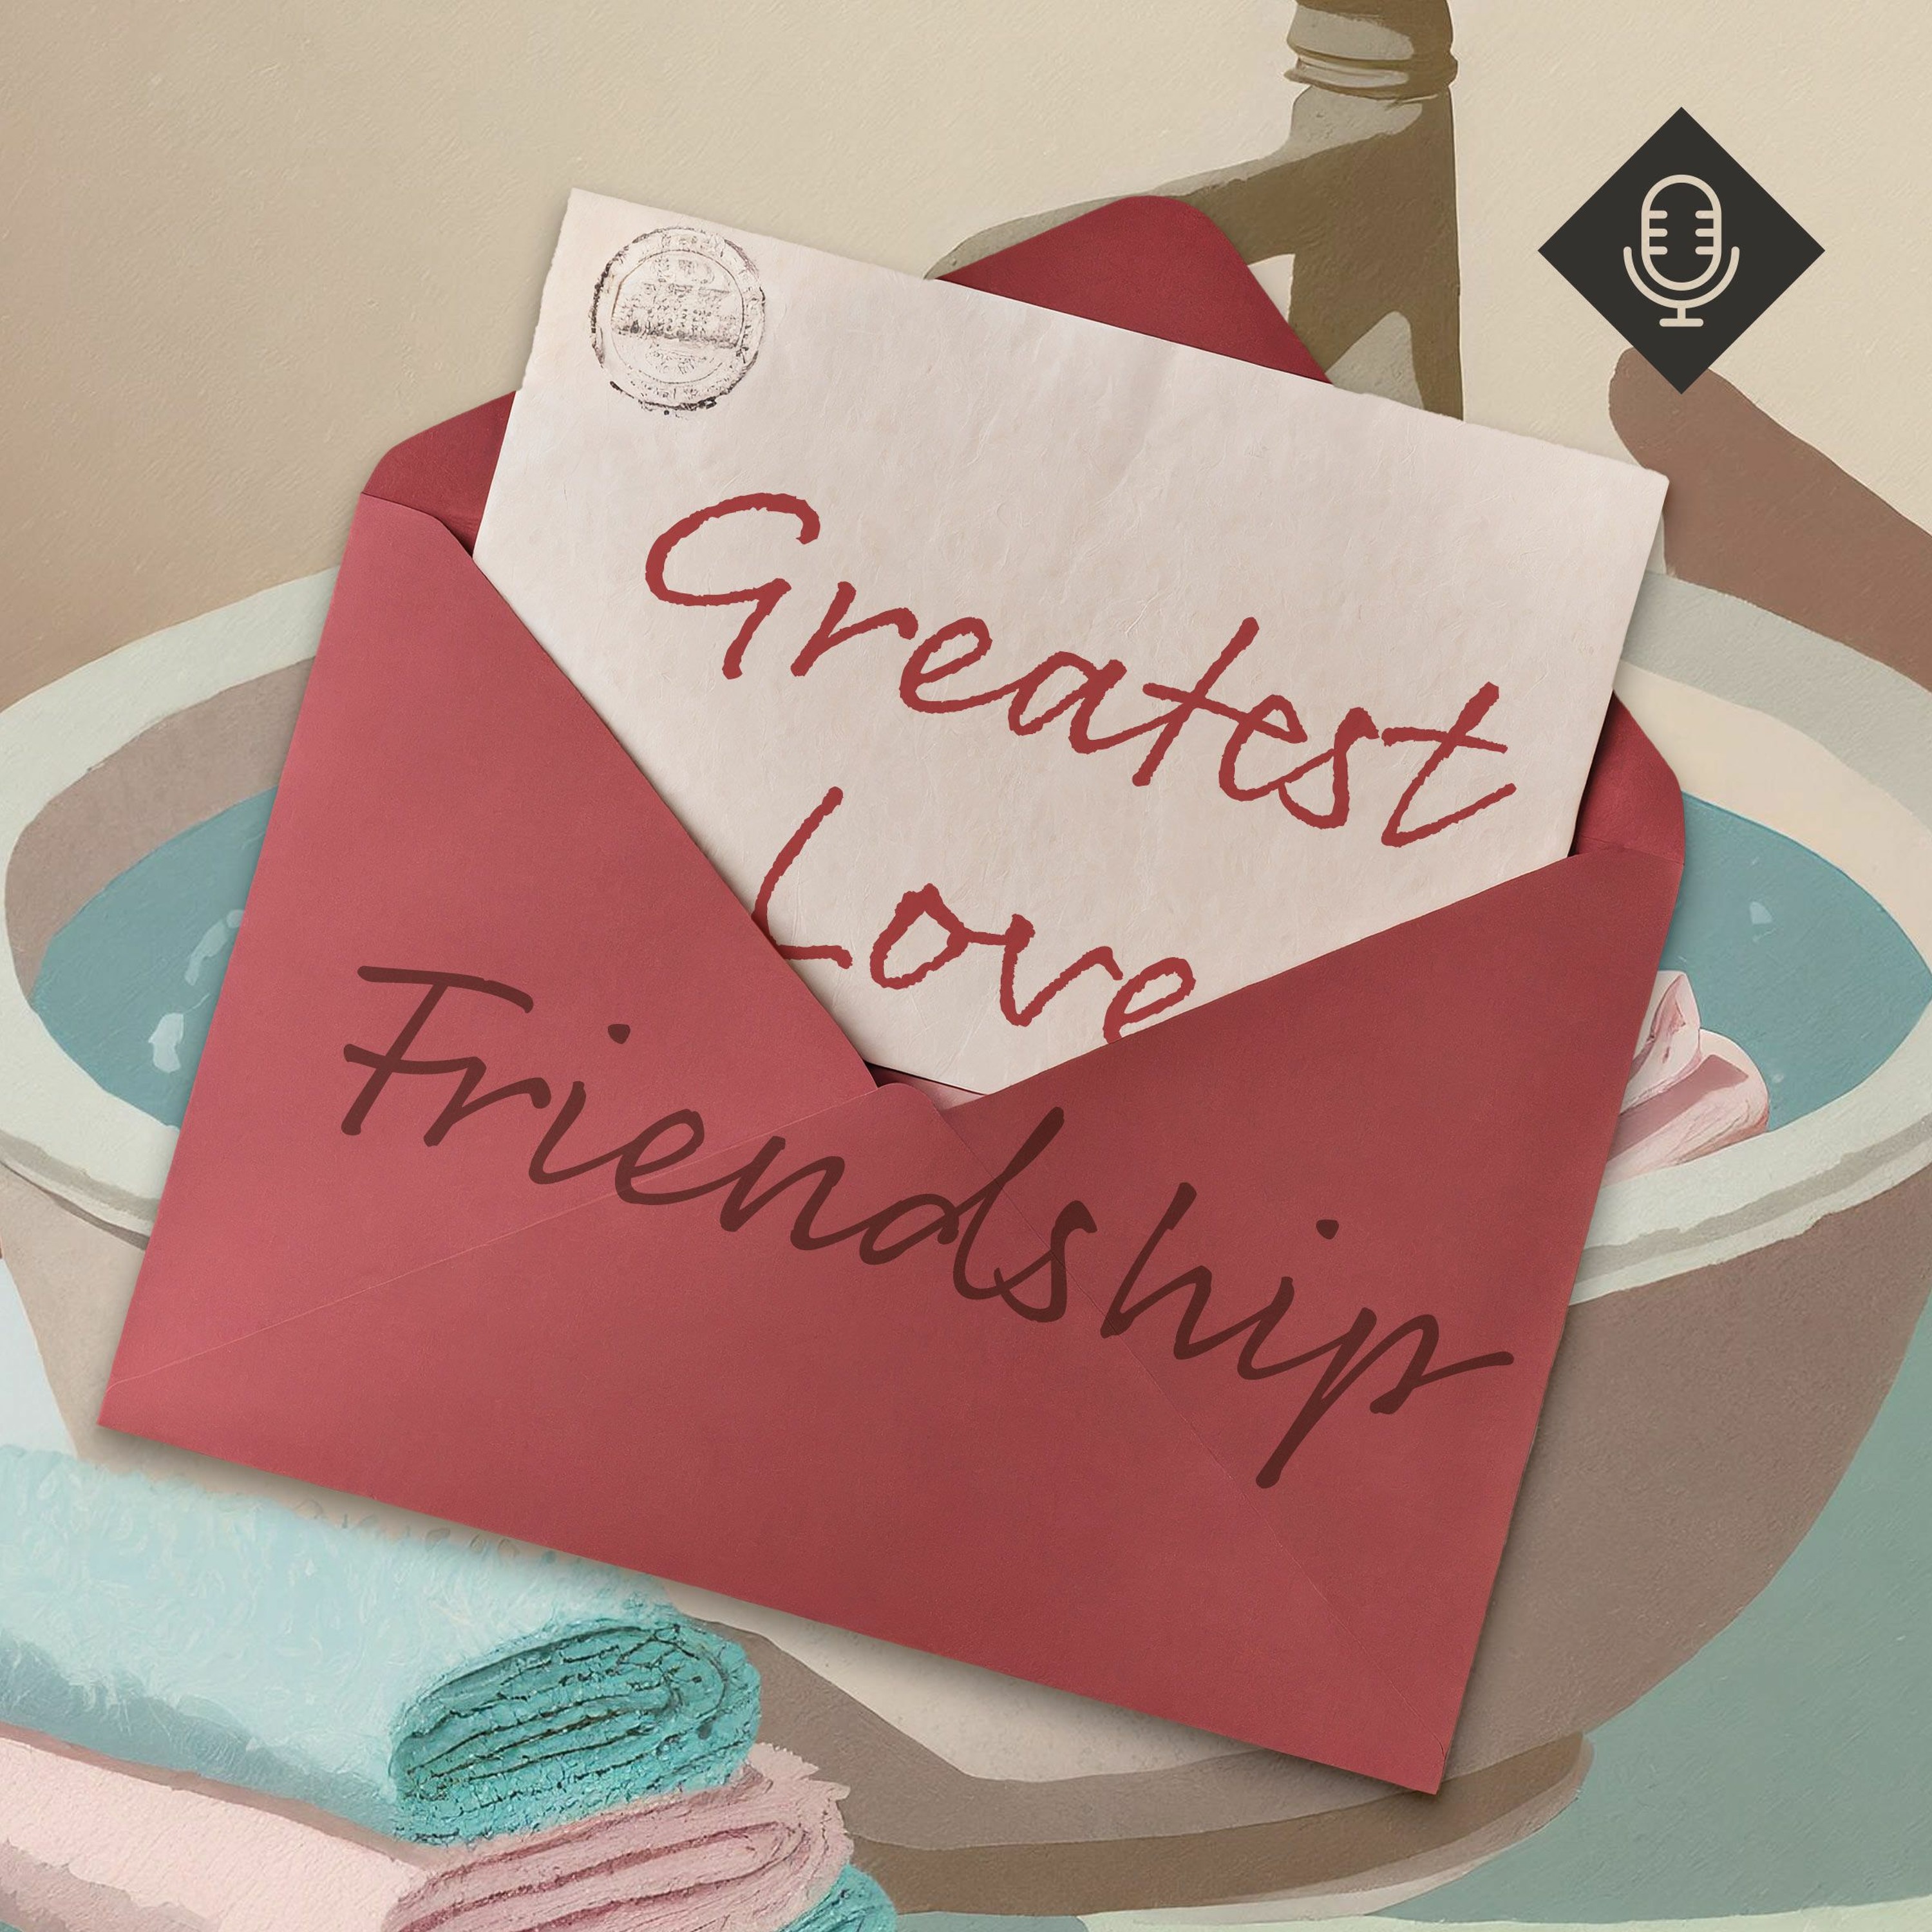 'Friendship: The Greatest Love' / Neil Dawson